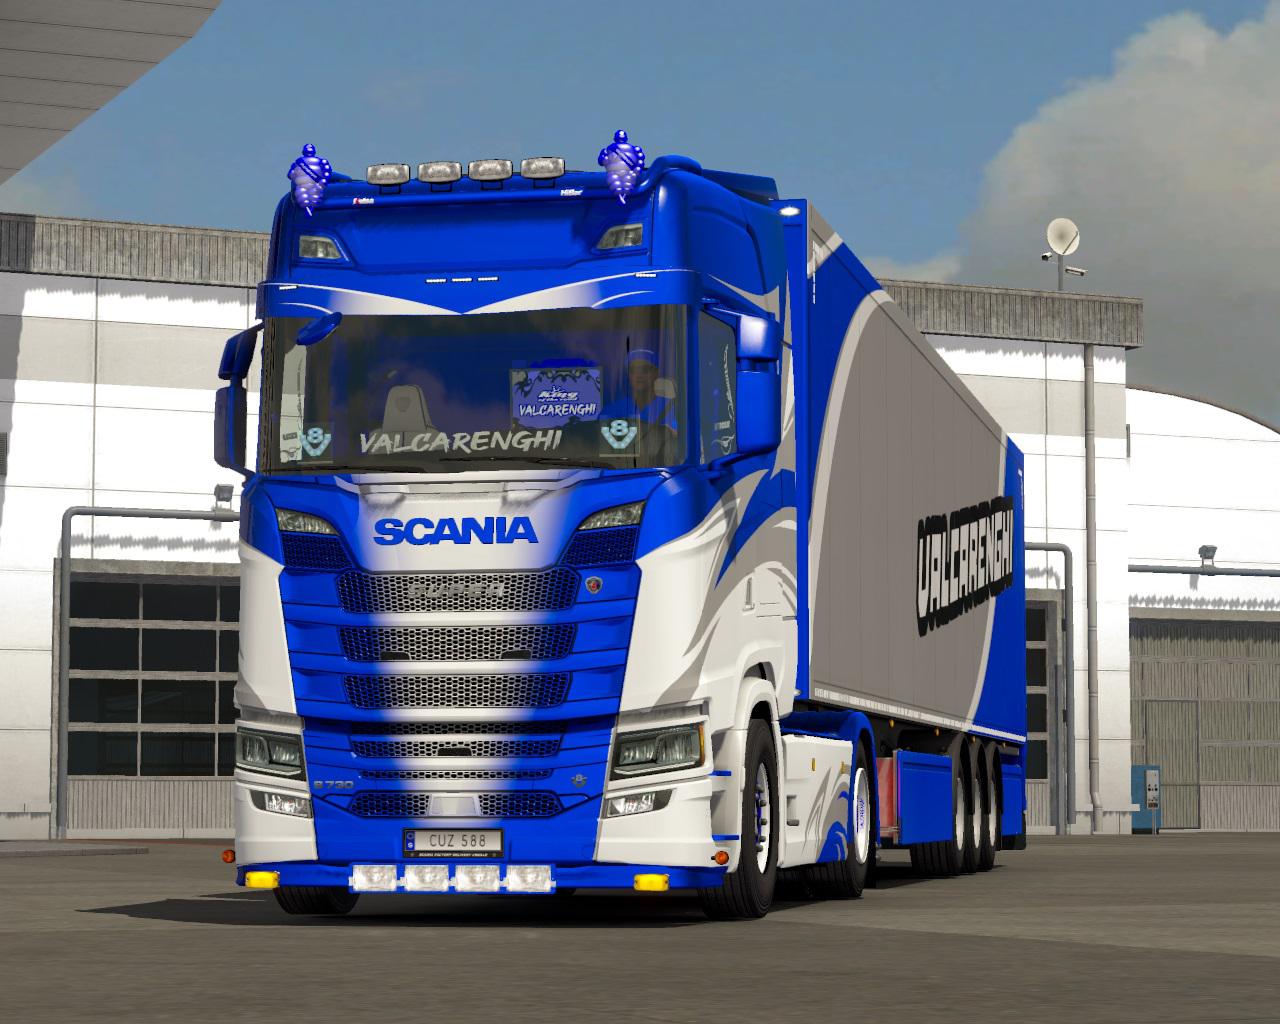 Ets2 Scania Skin